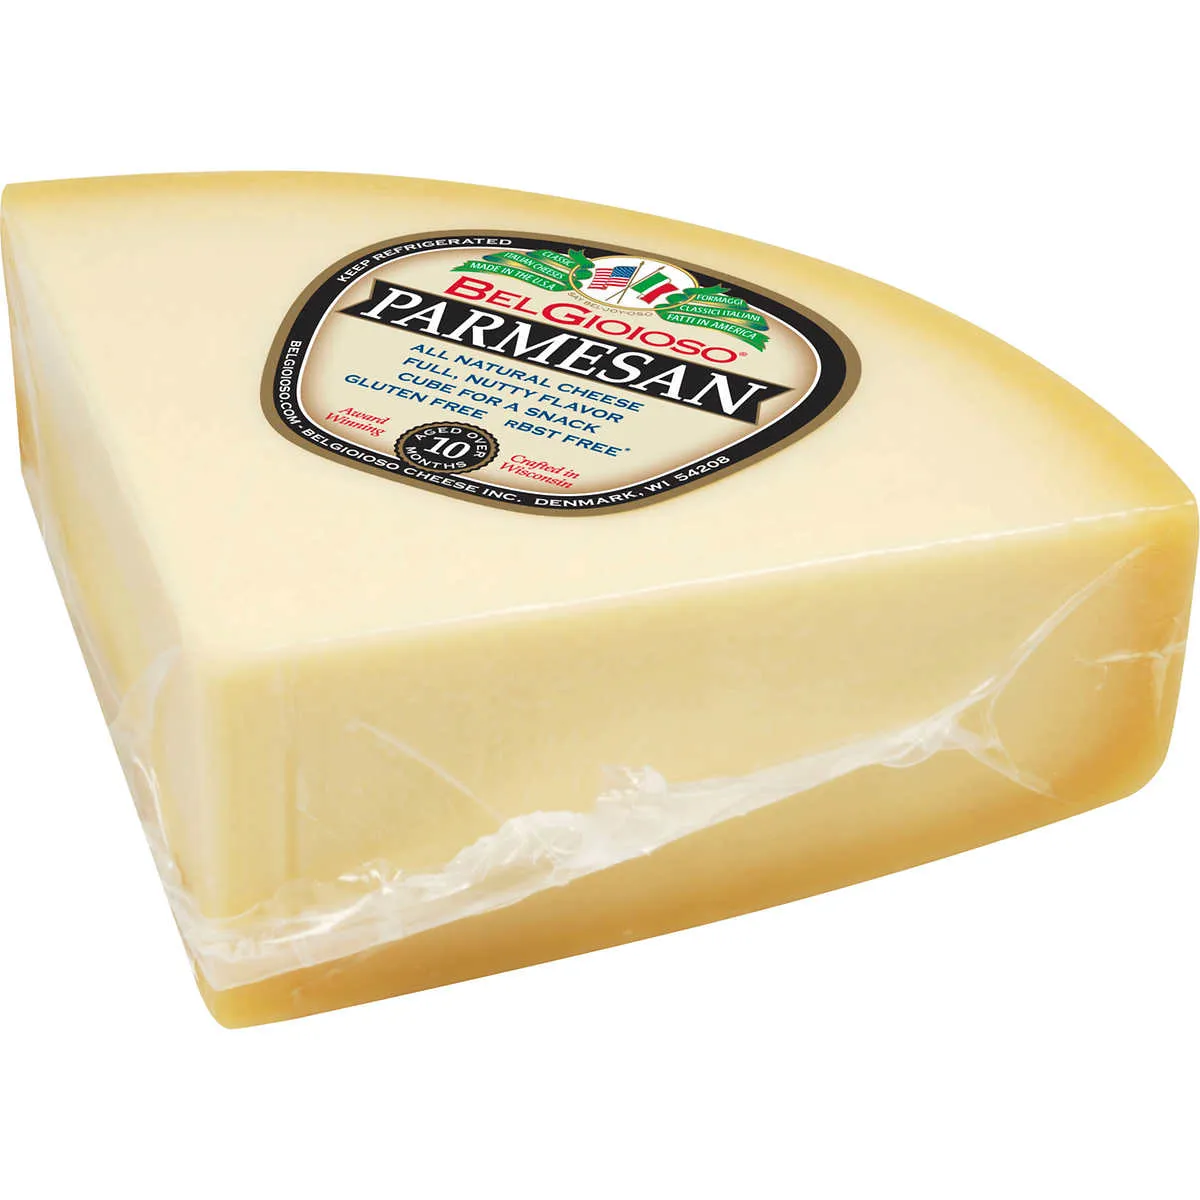 Groceryandmeat.com: BelGioioso Parmesan Cheese, 3 lb avg wt